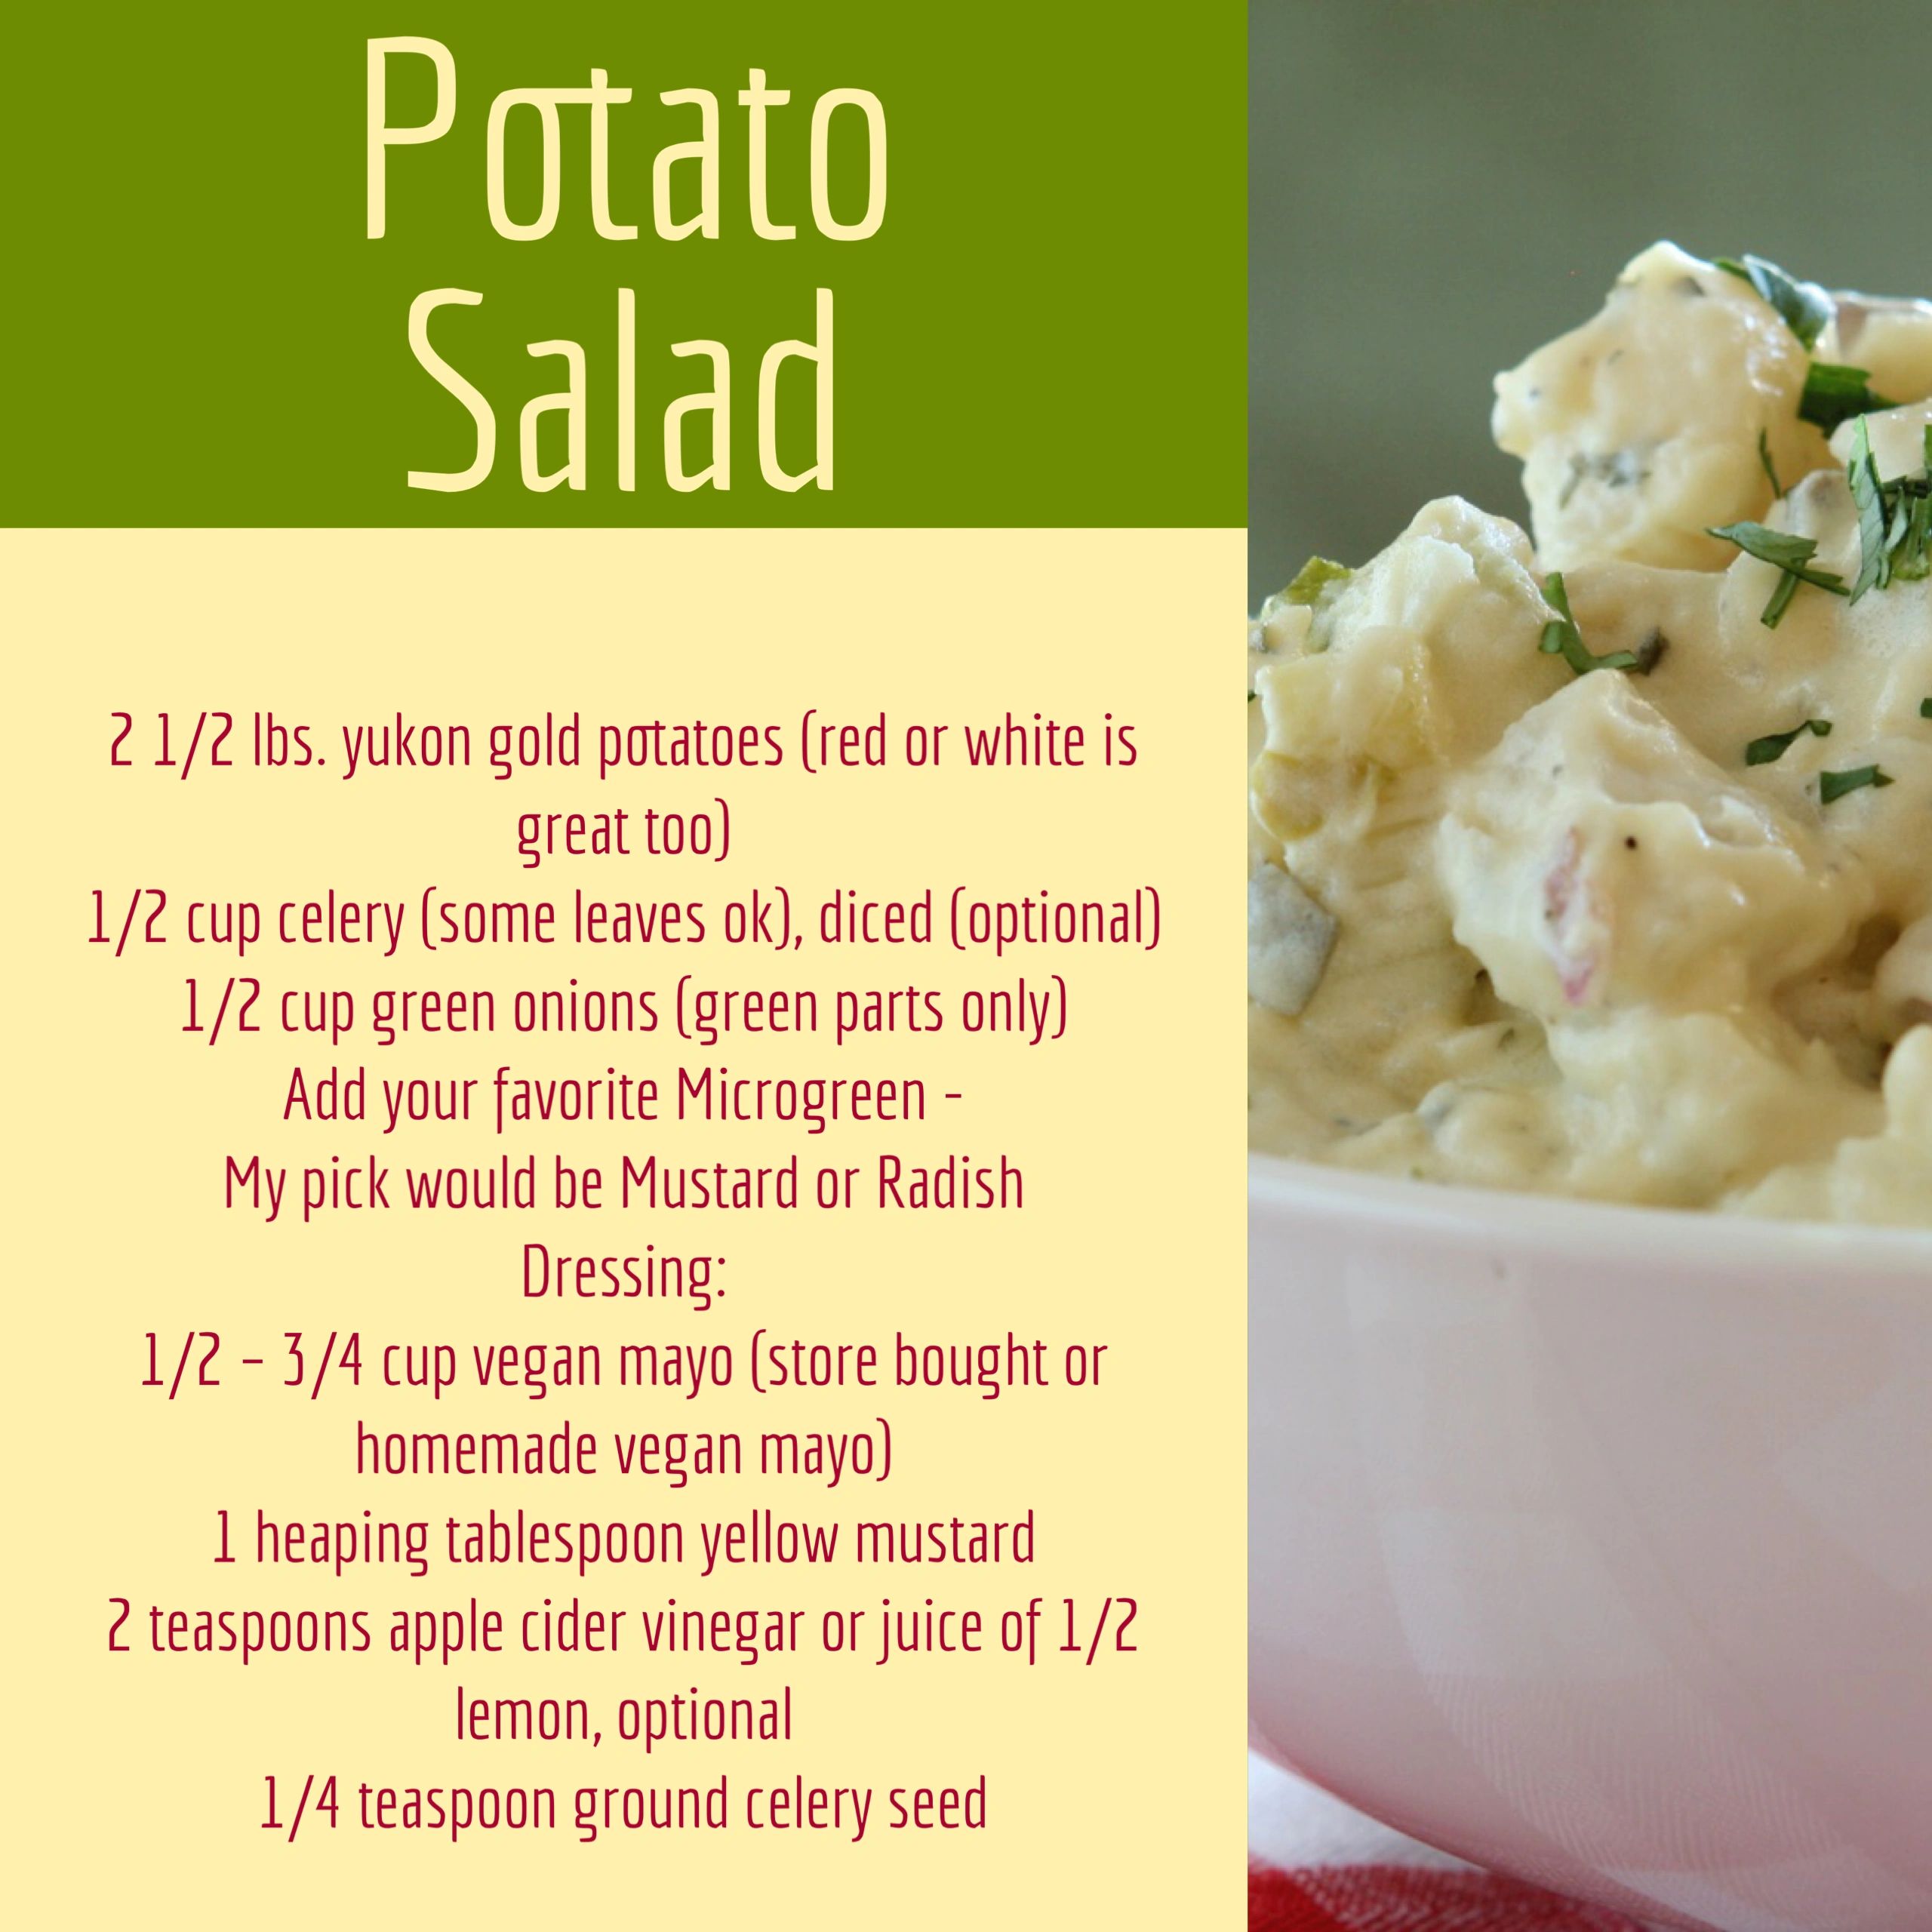 Adding microgreens to potato salad